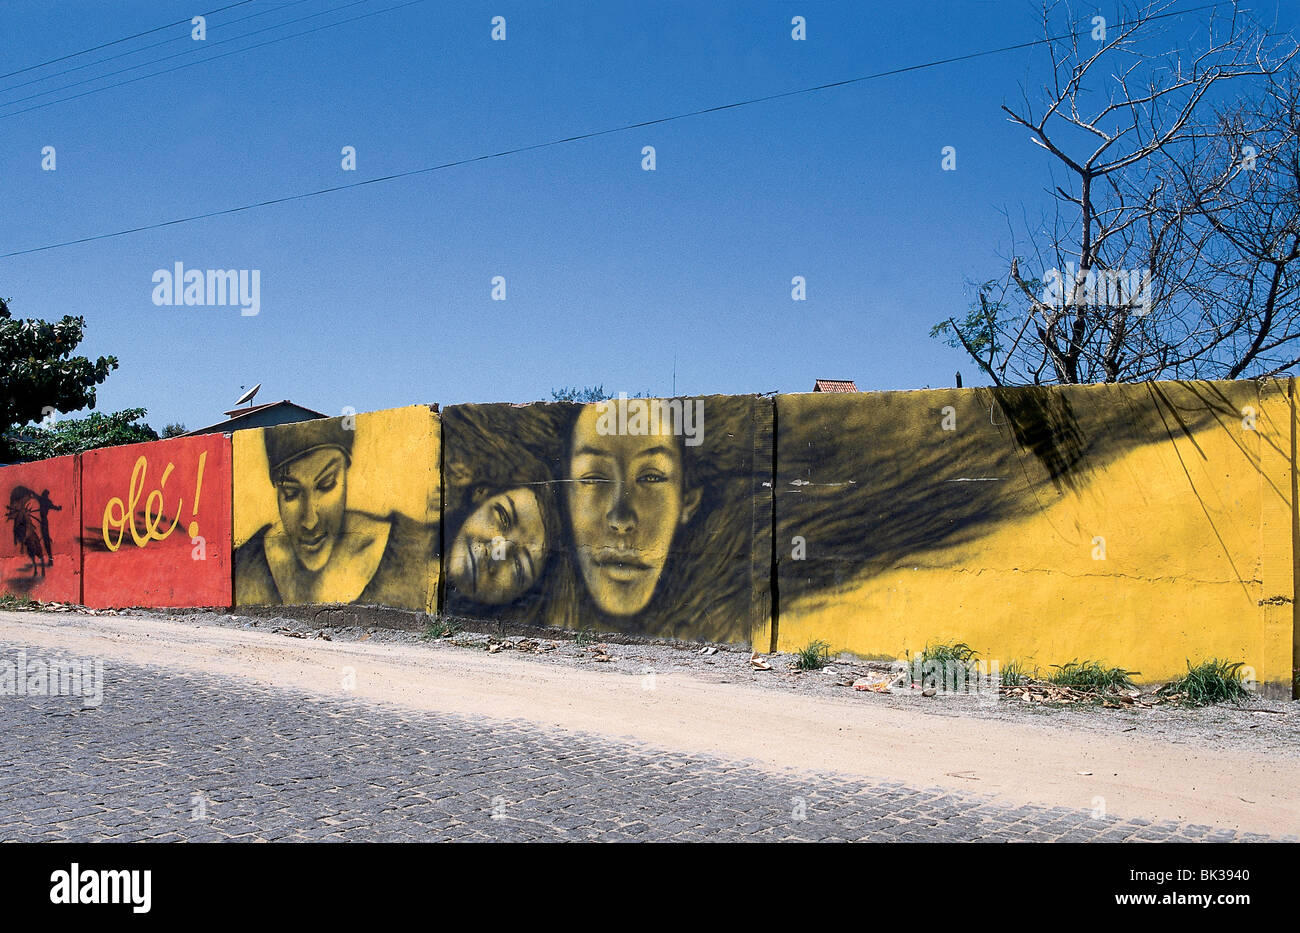 Wall mural in the municipality of Armação dos Búzios, Brazil Stock Photo